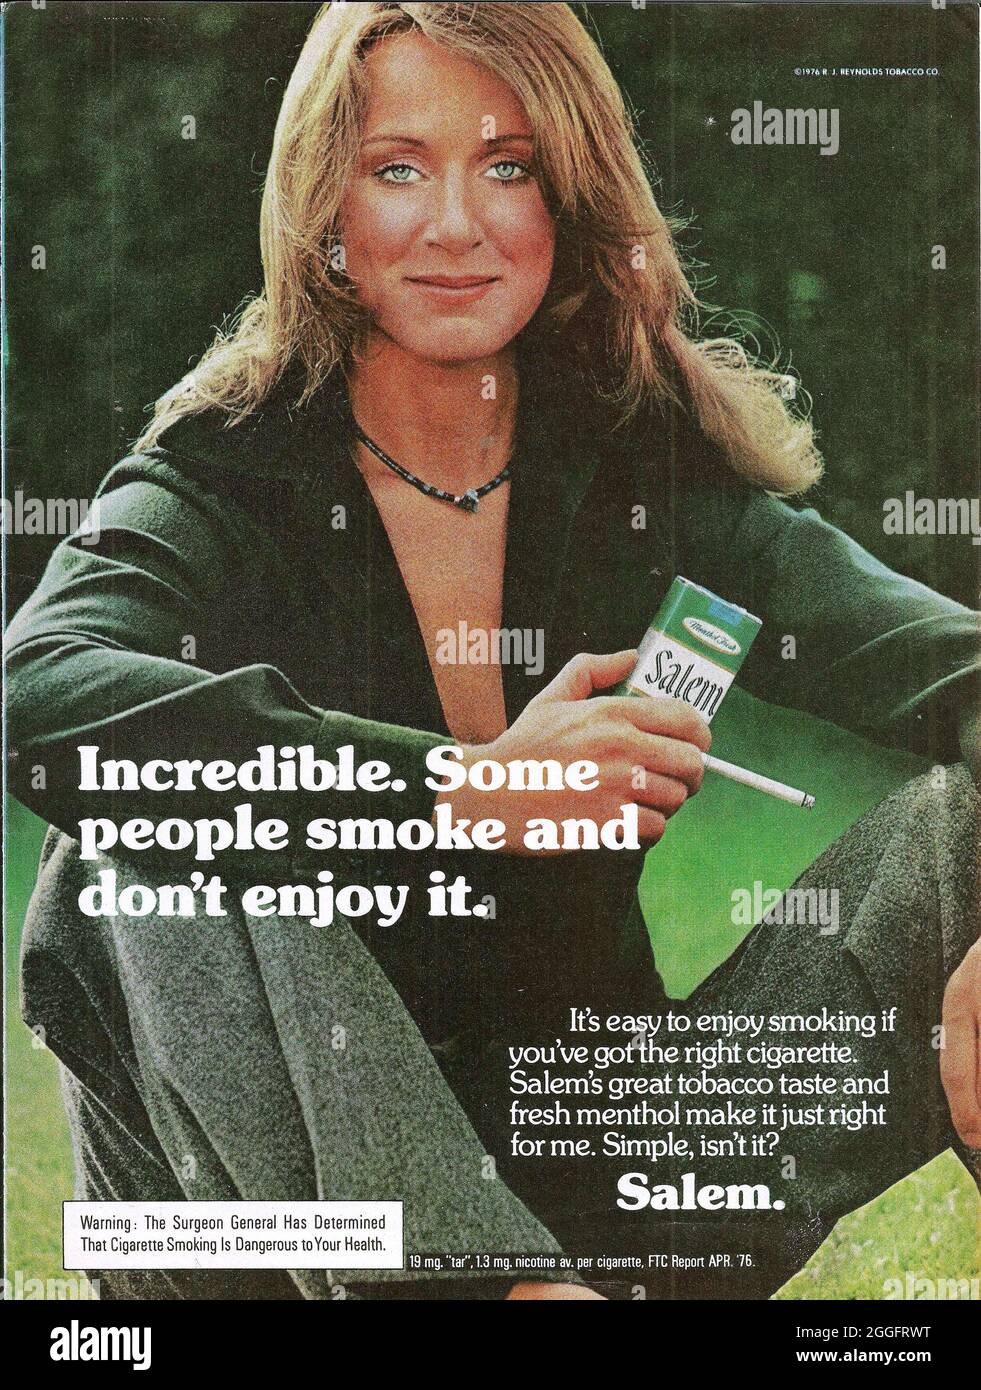 Salem cigarettes paper advert advertisement 1980s 1970s Stock Photo